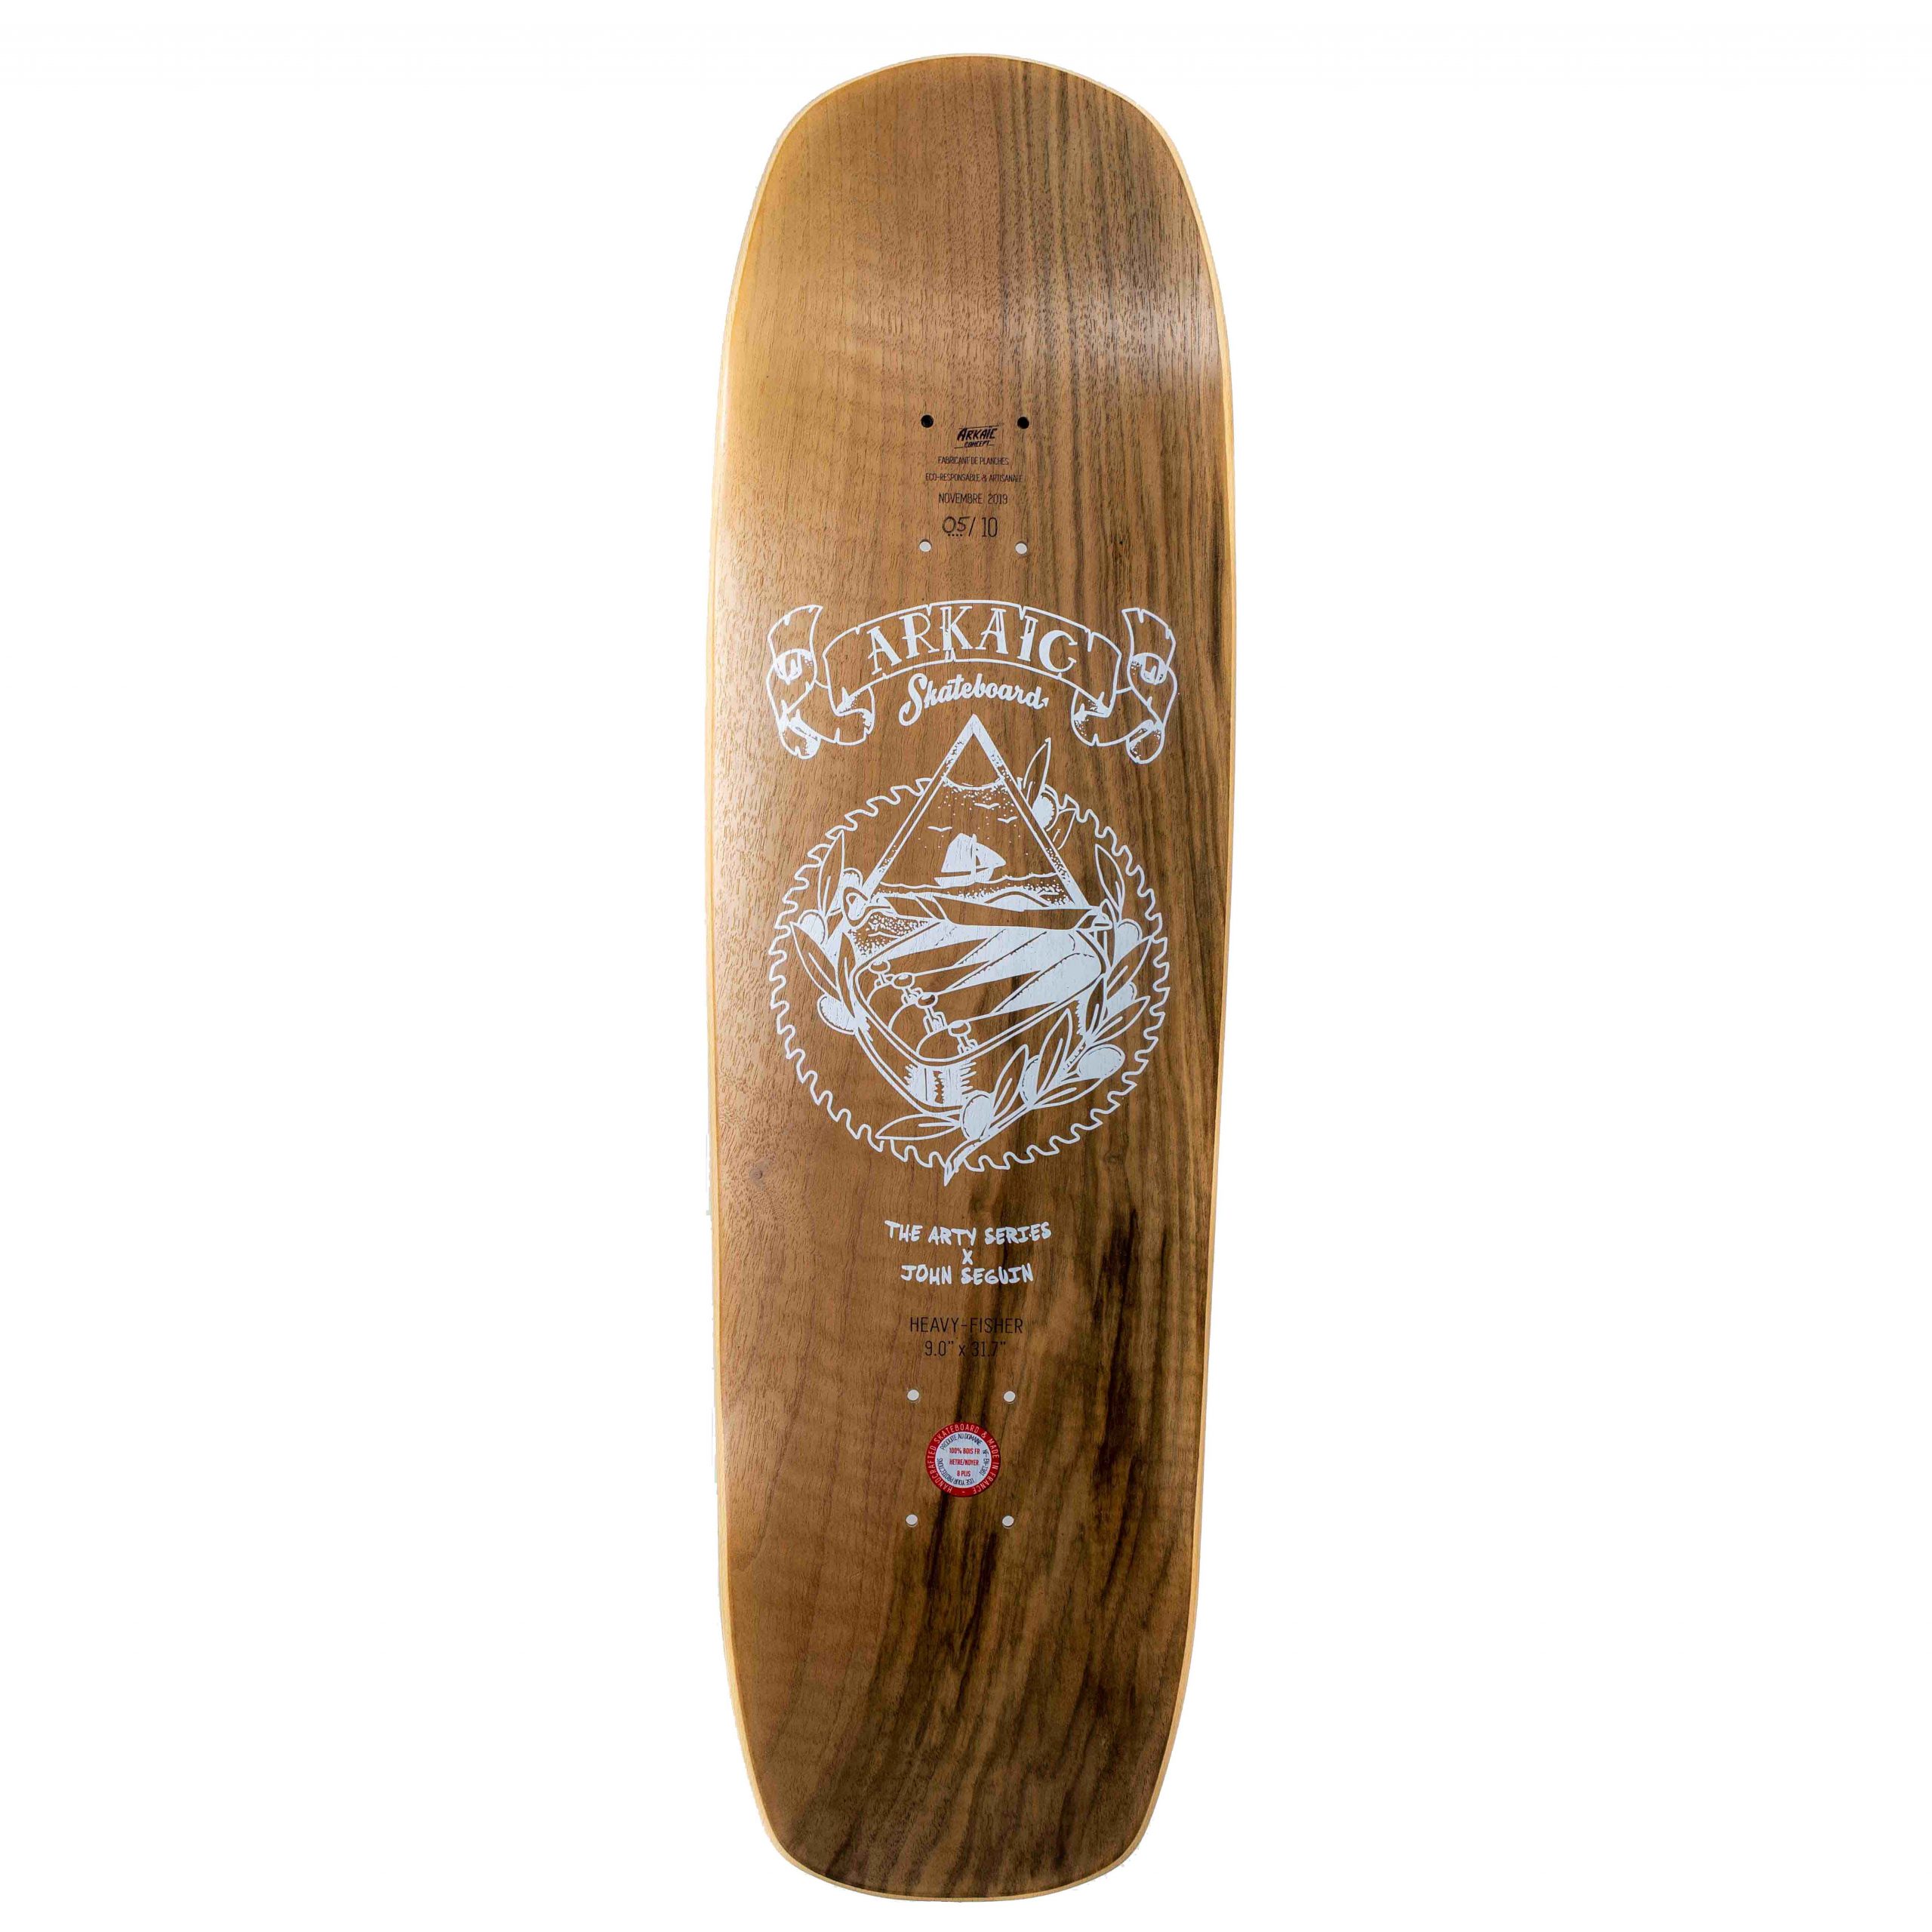 planche de skateboard fabriquée en france Arkaic skateboard made in france 00031